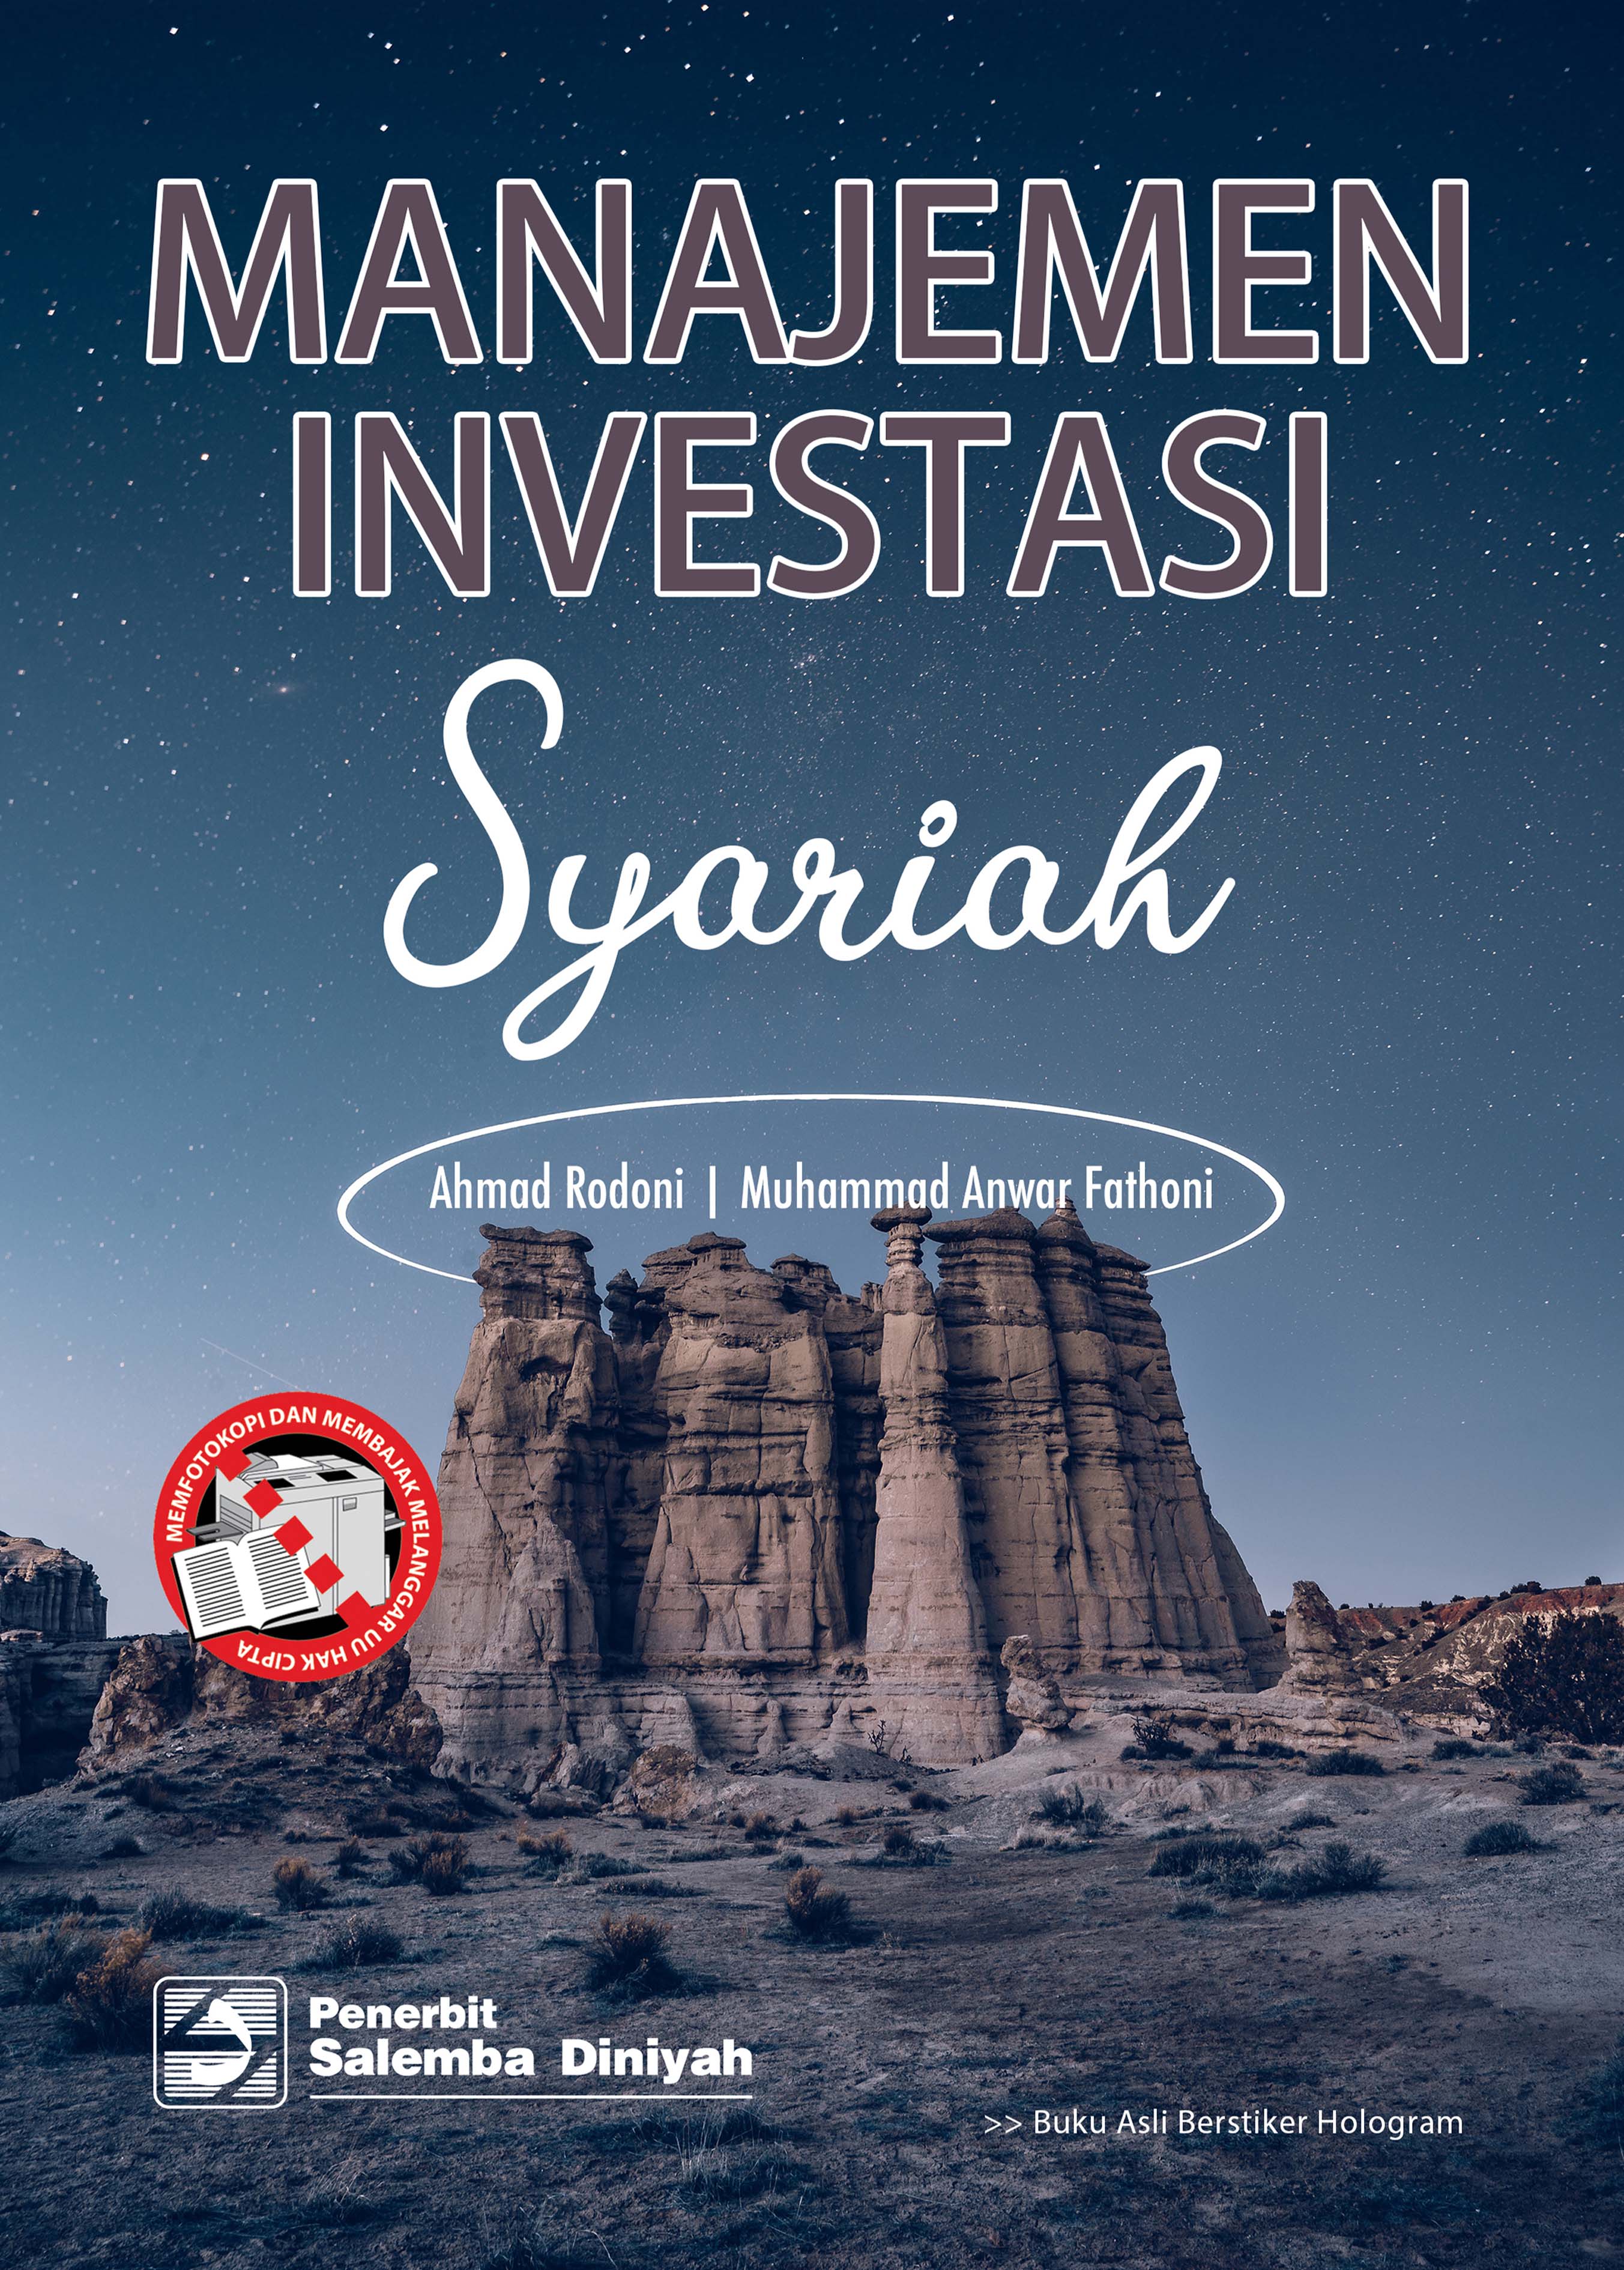 Manajemen investasi syariah